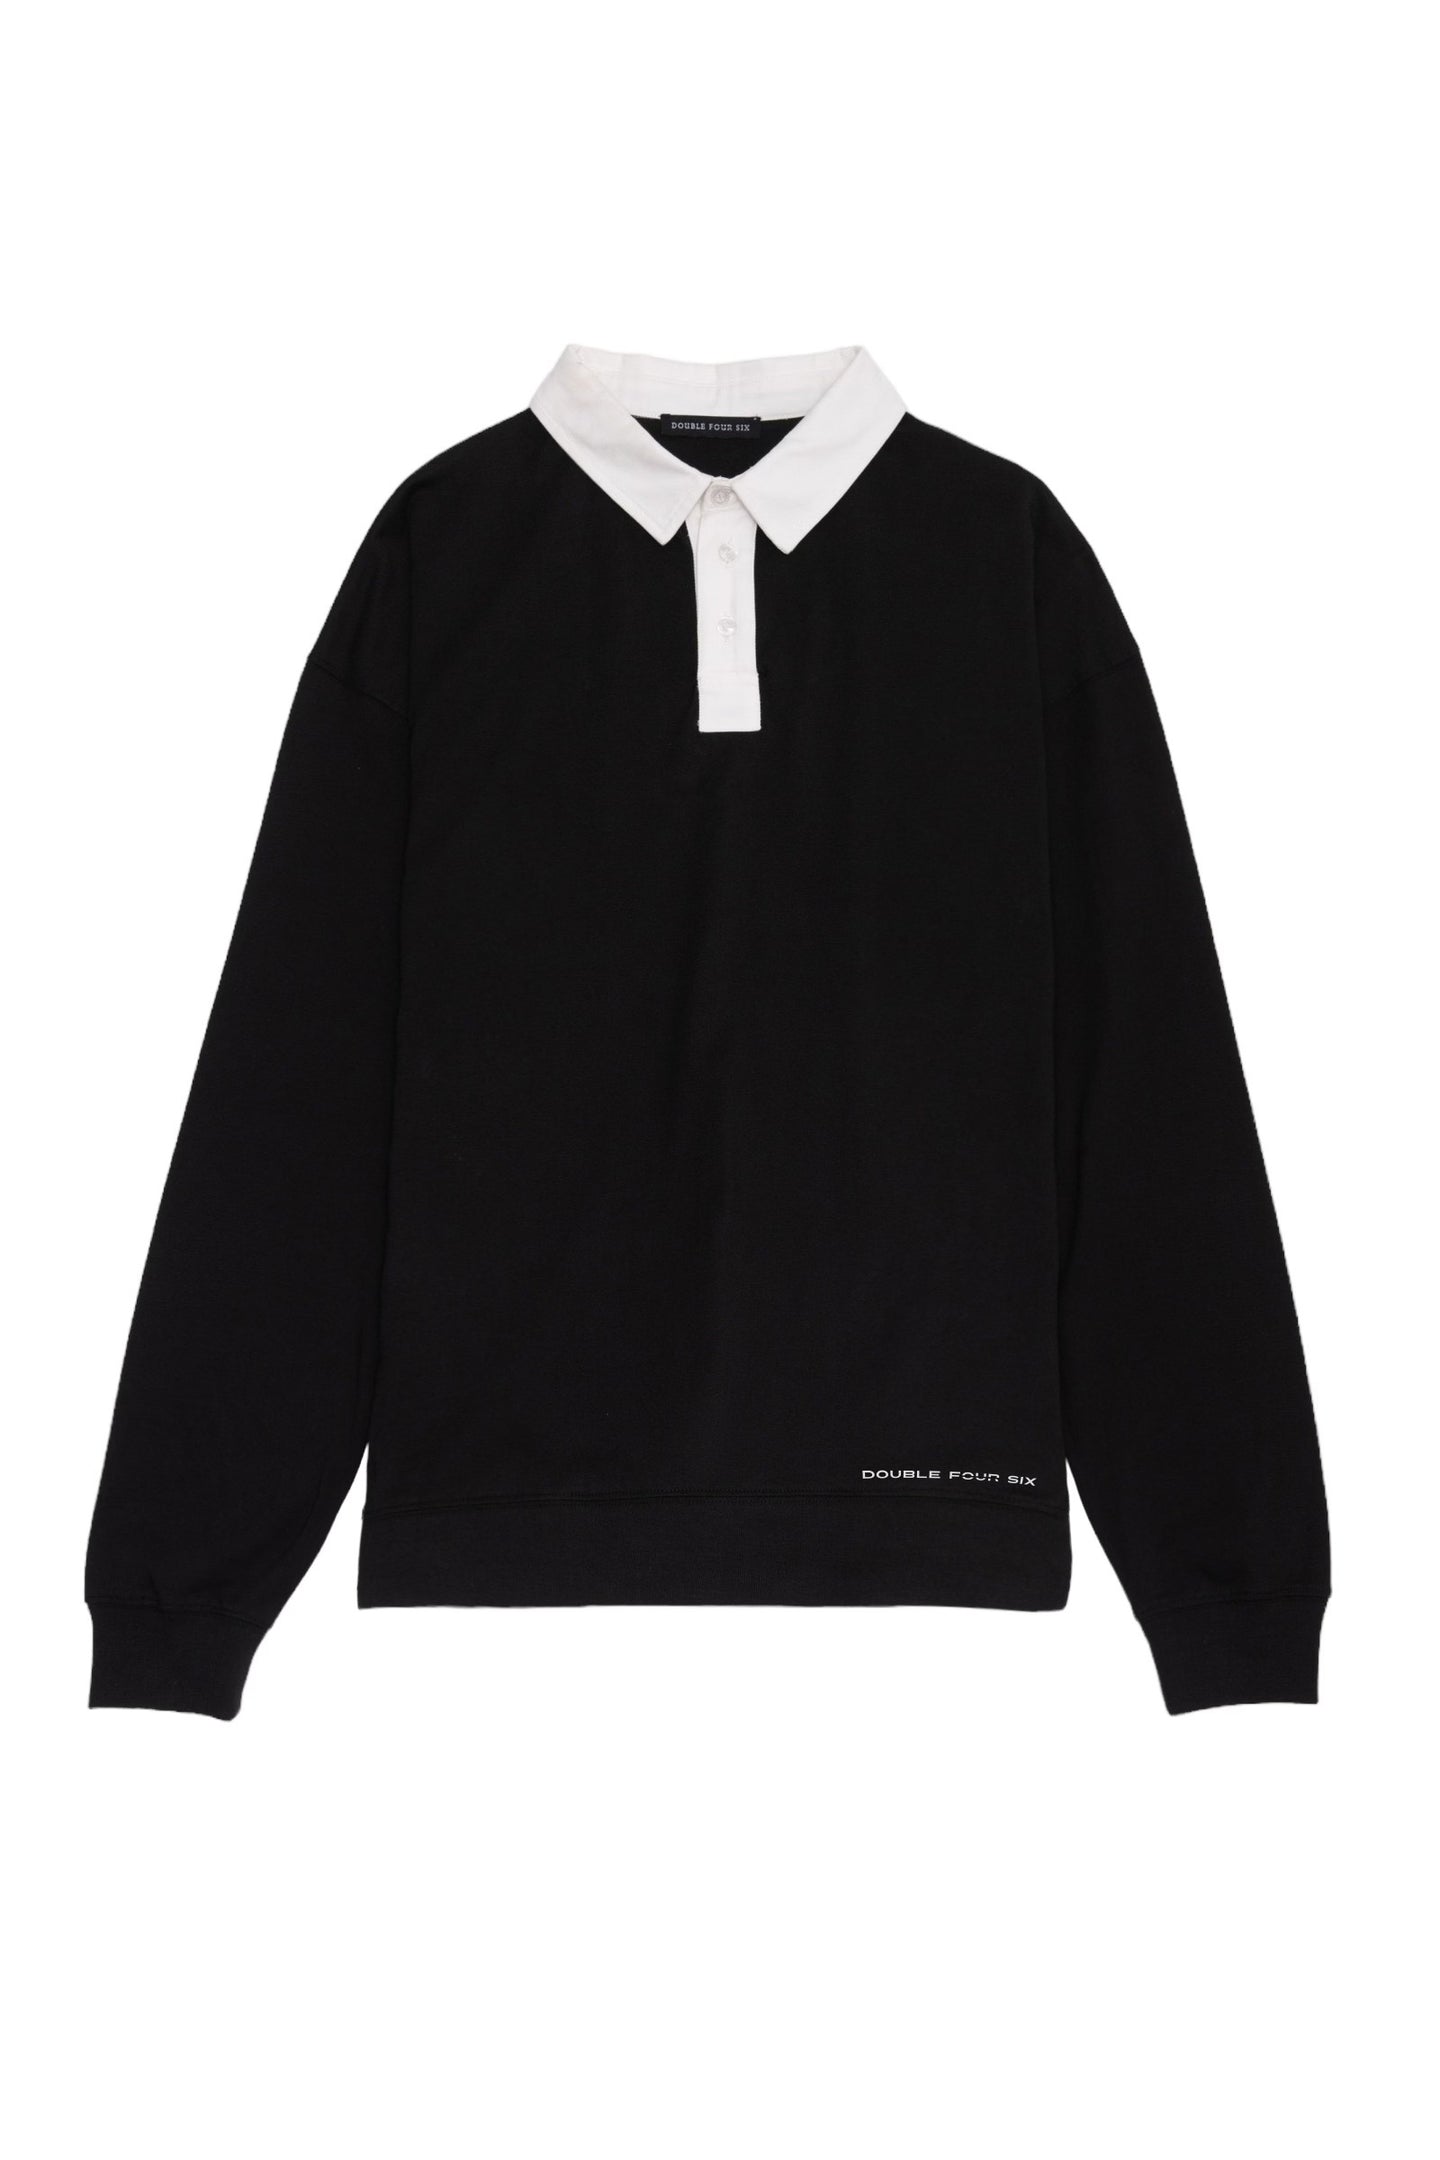 DOUBLE FOUR SIX- Long Sleeve Polo Shirt Black